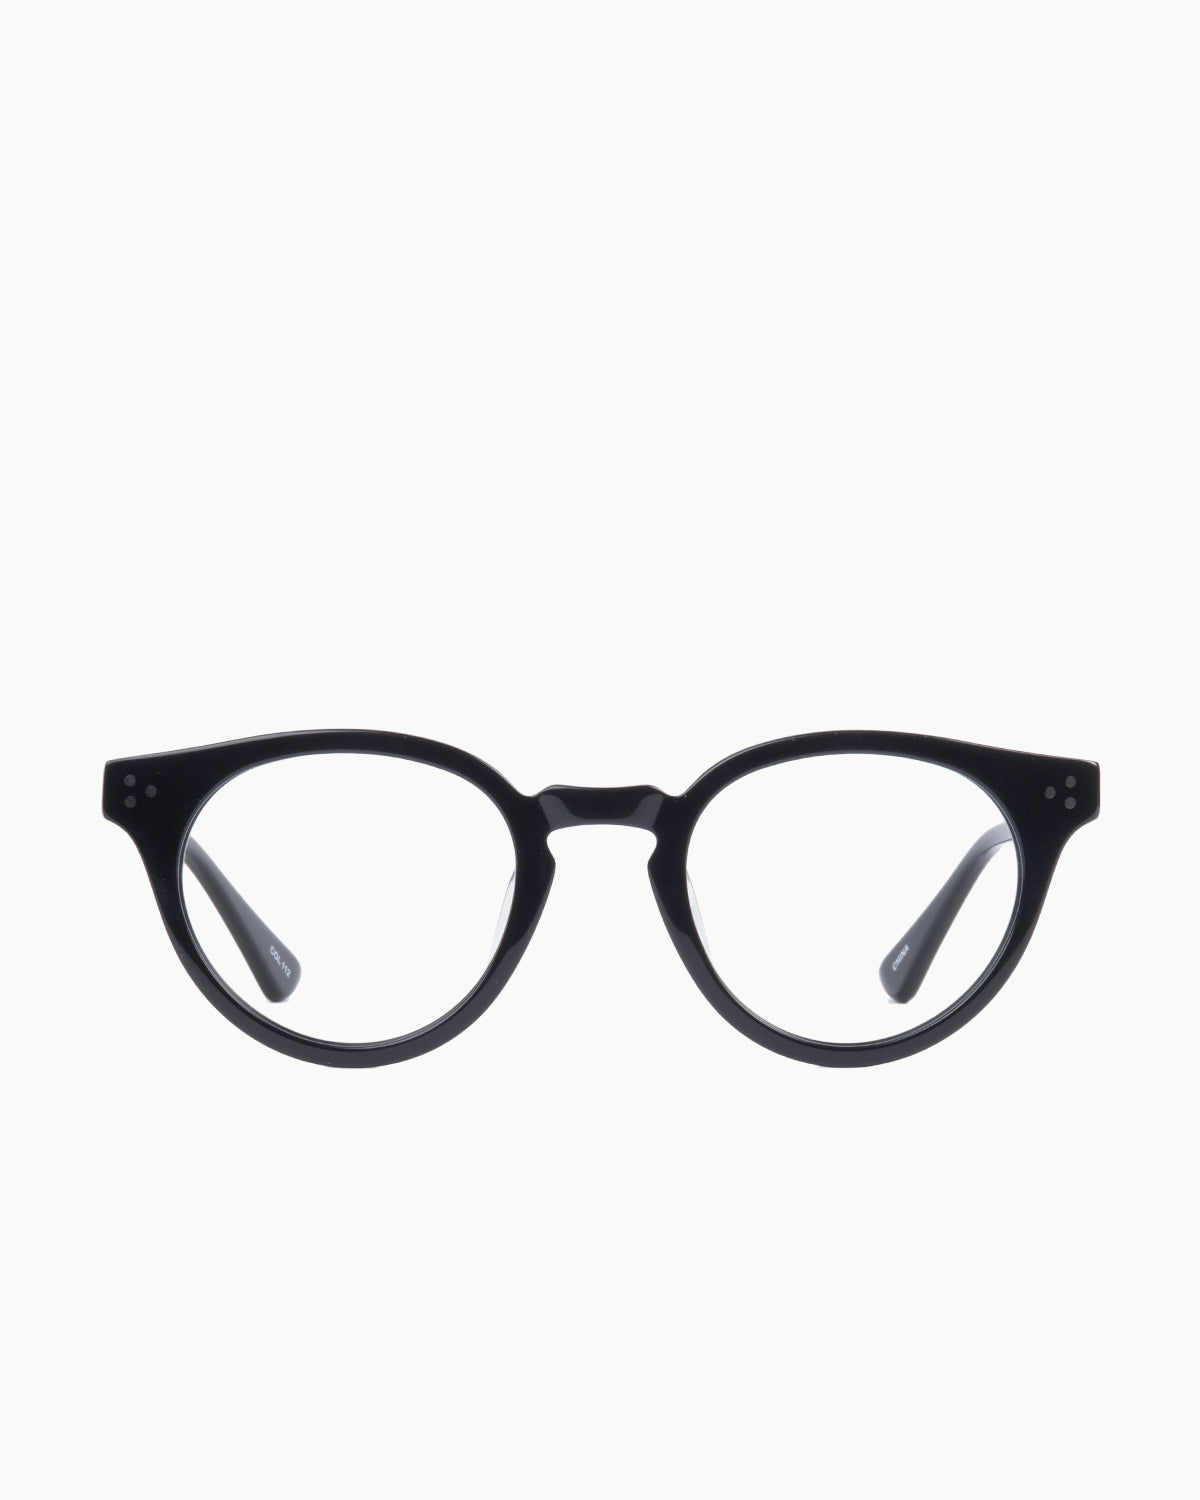 Evolve - Stills - 112 | glasses bar